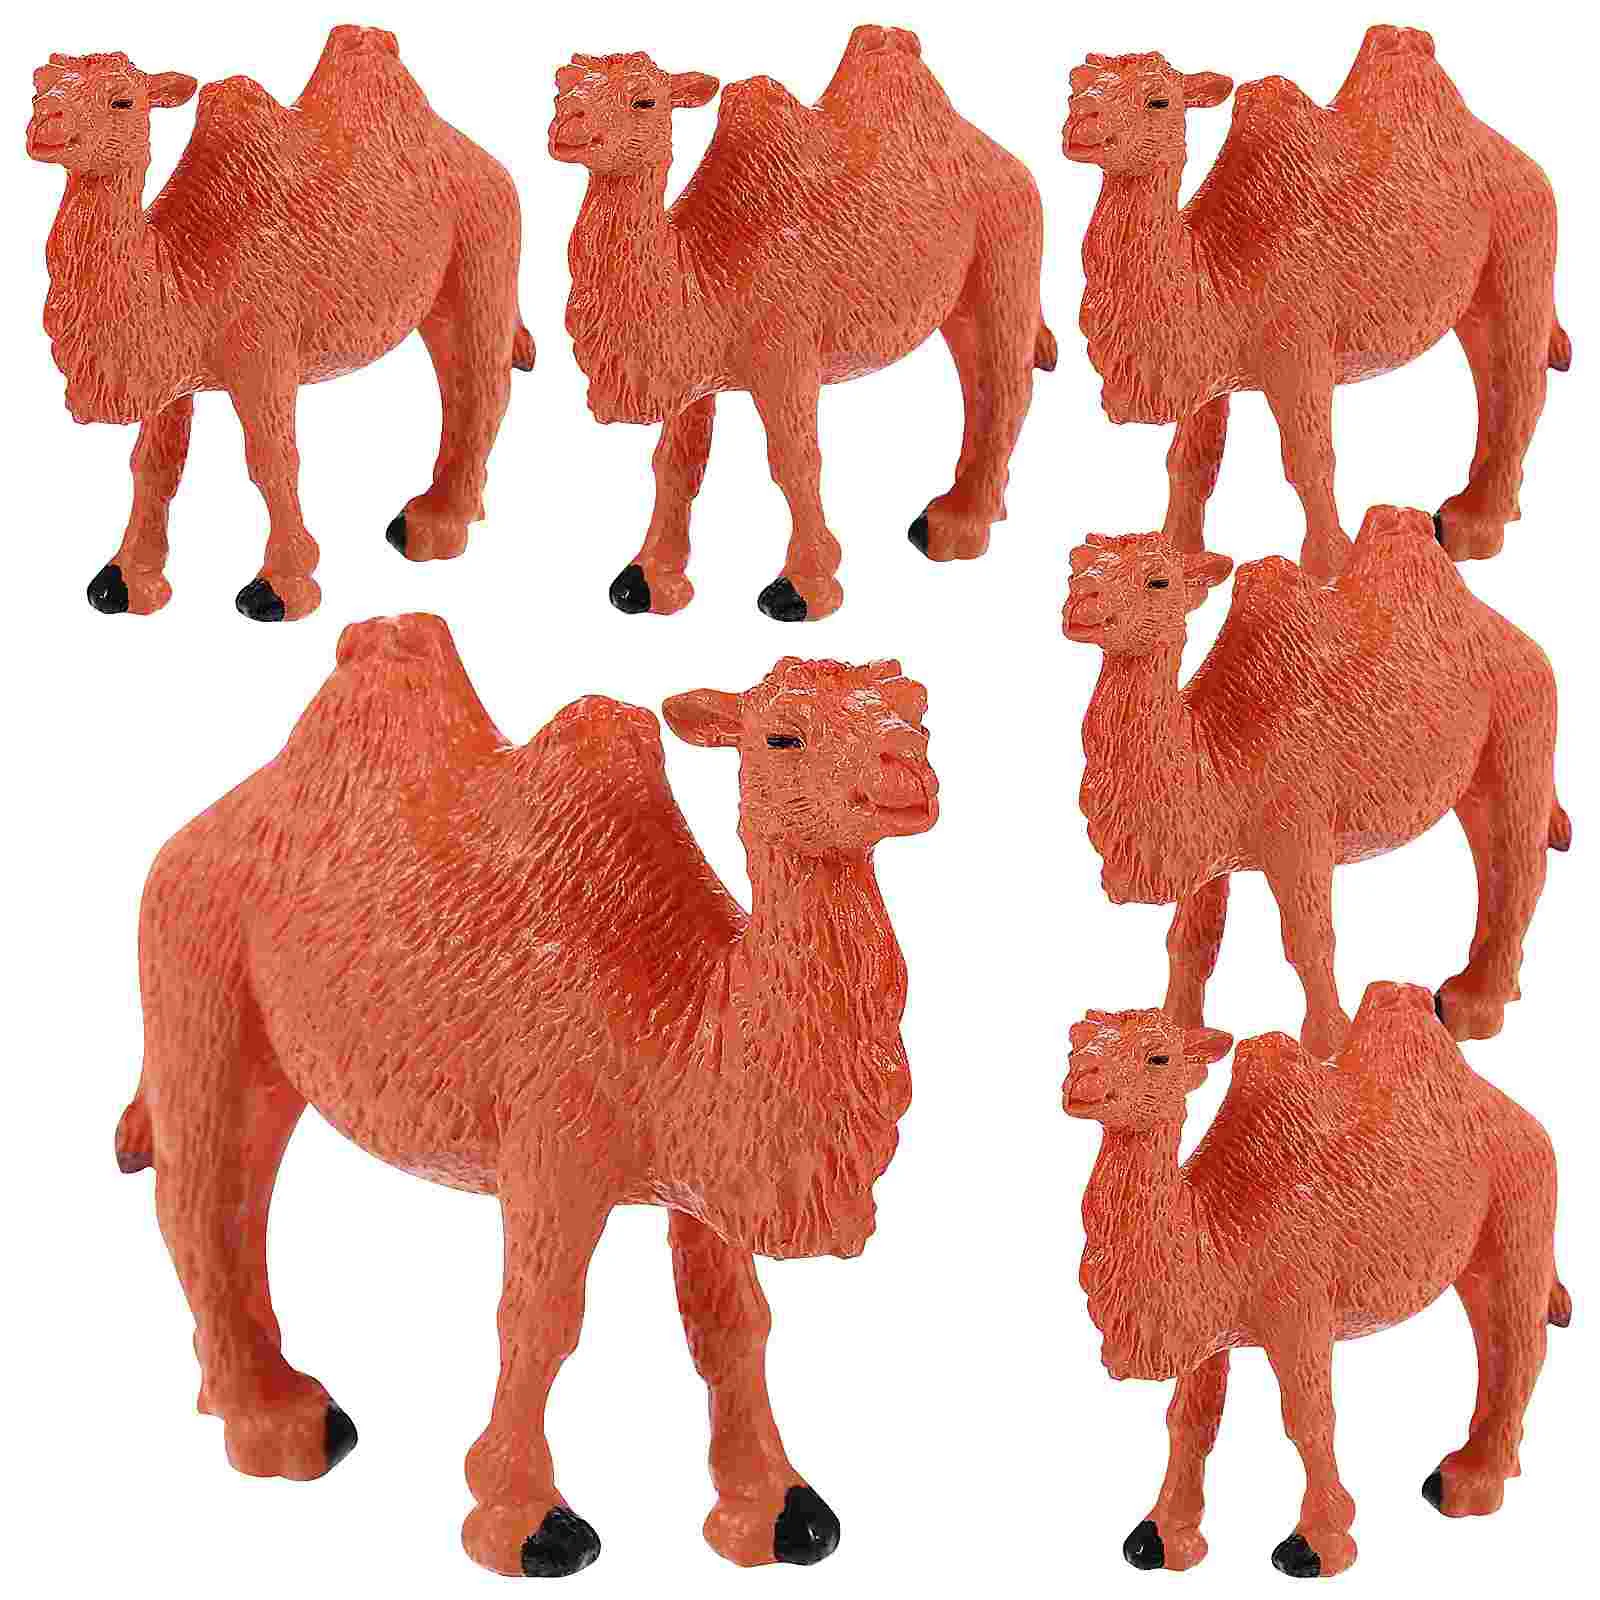 

6 Pcs Miniature Camel Models Realistic Camel Figurines Animal Models Desktop Ornaments Kids Toys